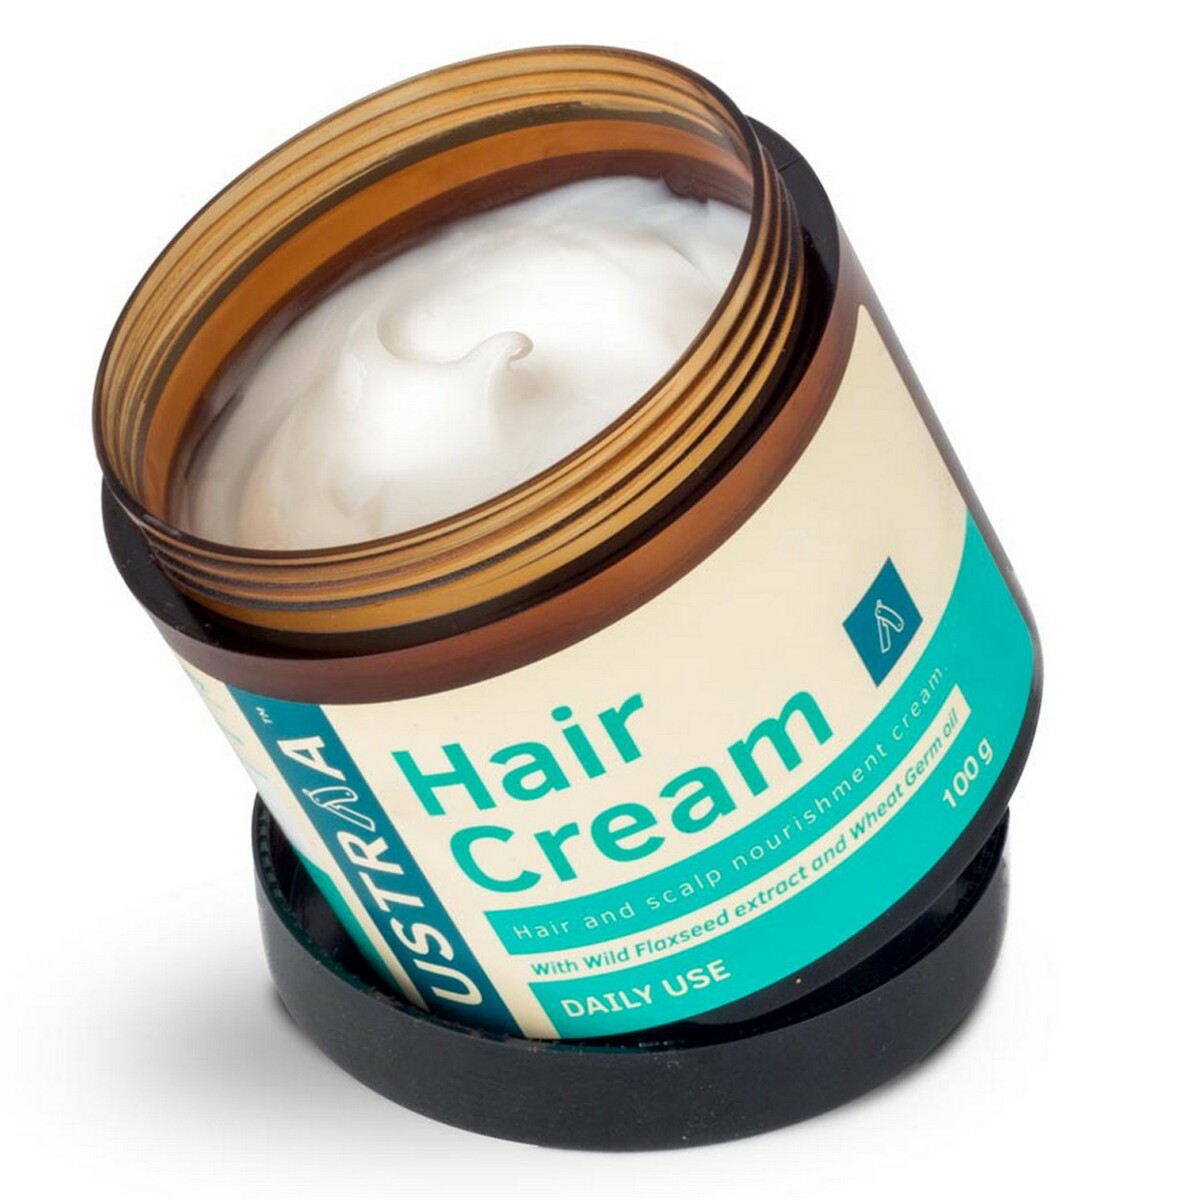 Ustraa Hair Cream Daily Use 100gm